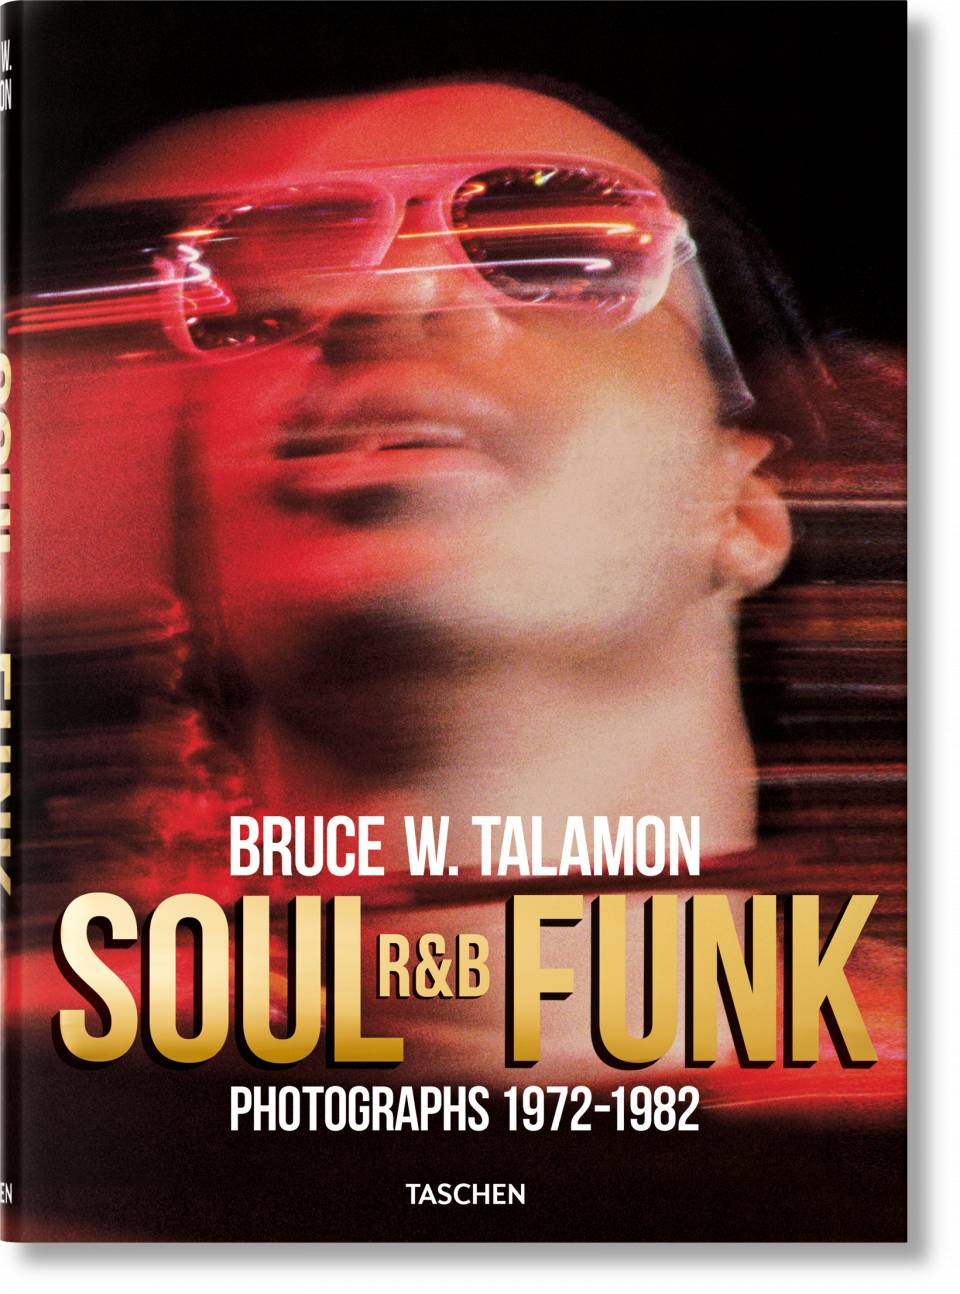 Bruce W. Talamon. Soul. R&B. Funk. Photographs 1972-1982 PRE-ORDER